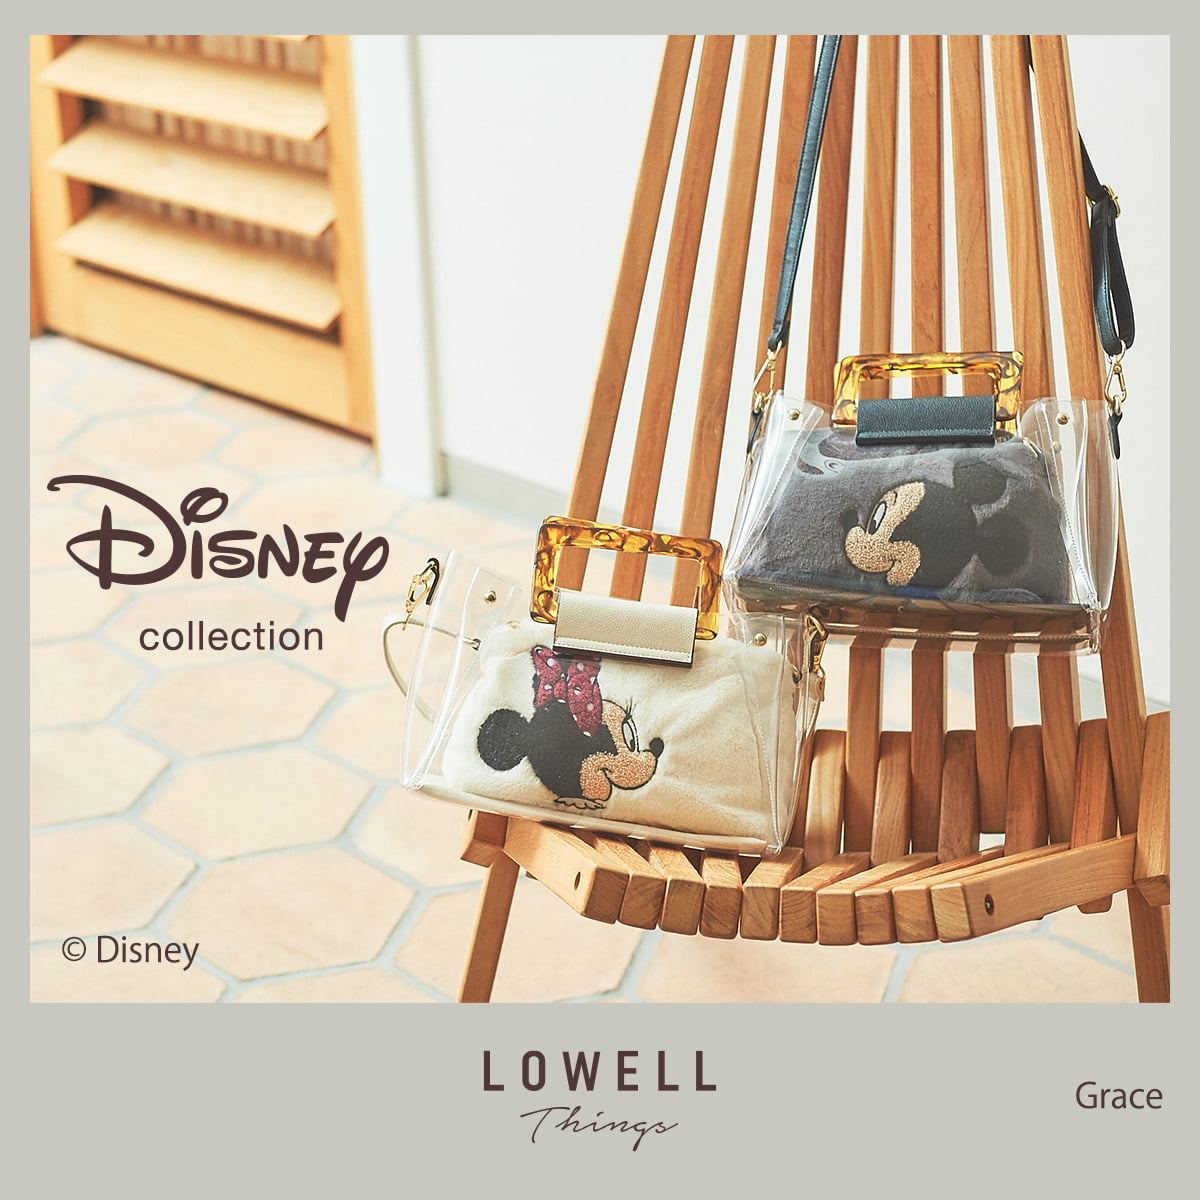 Lowell Thingsが想いを込めて演出する Disney Collection